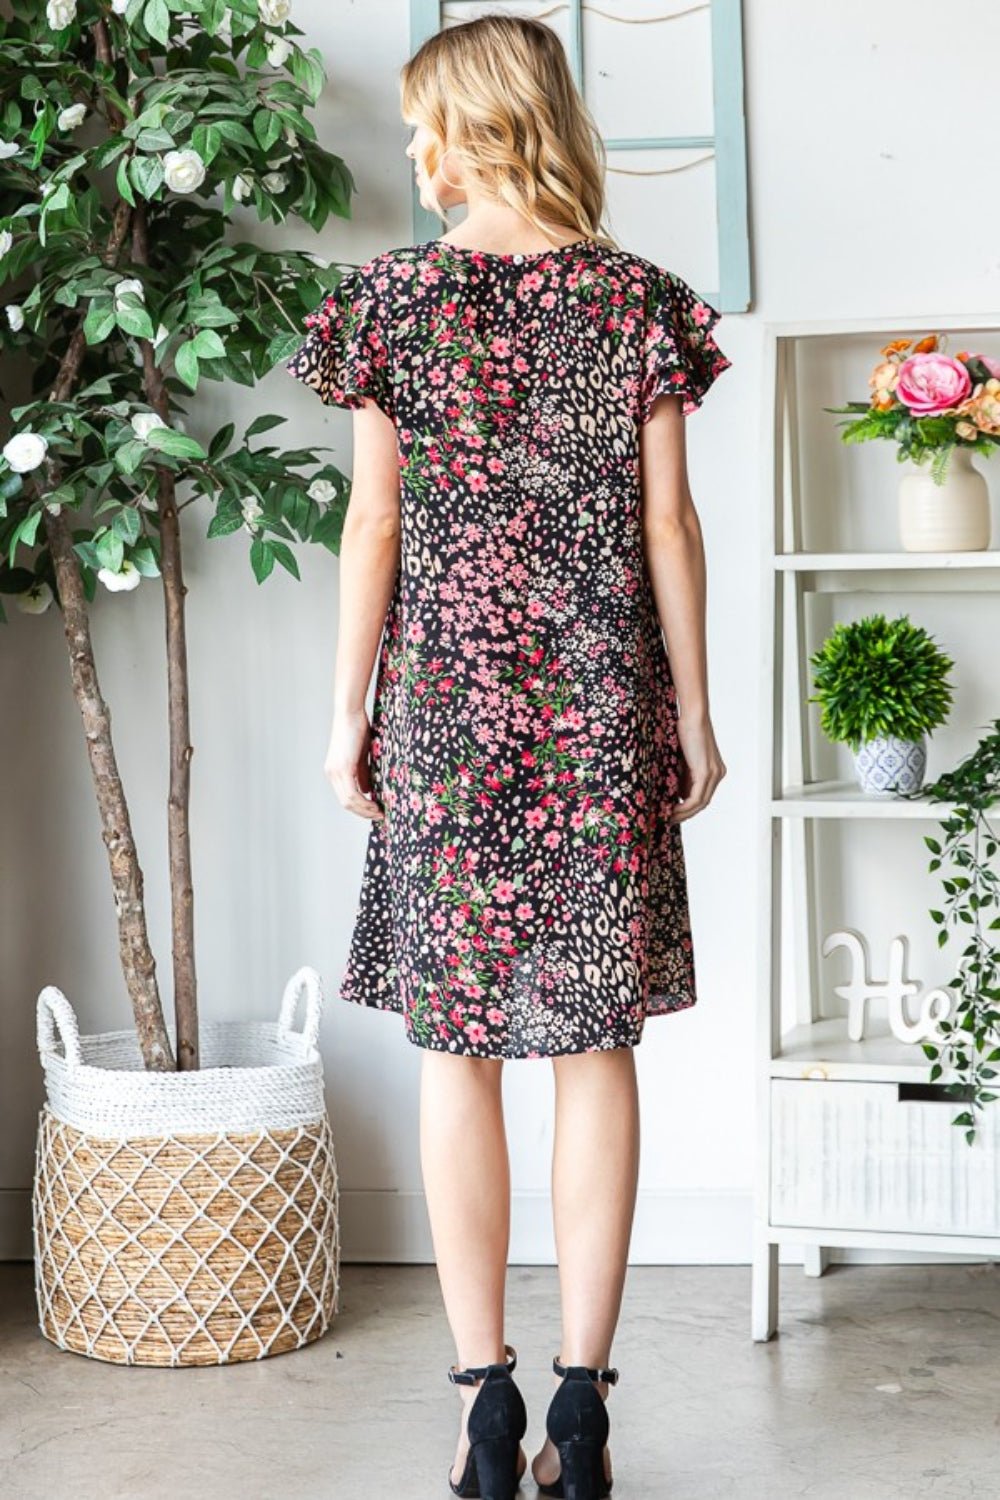 Floral Ruffled Knee-Length Dress with Pockets in BlackKnee-Length DressHeimish